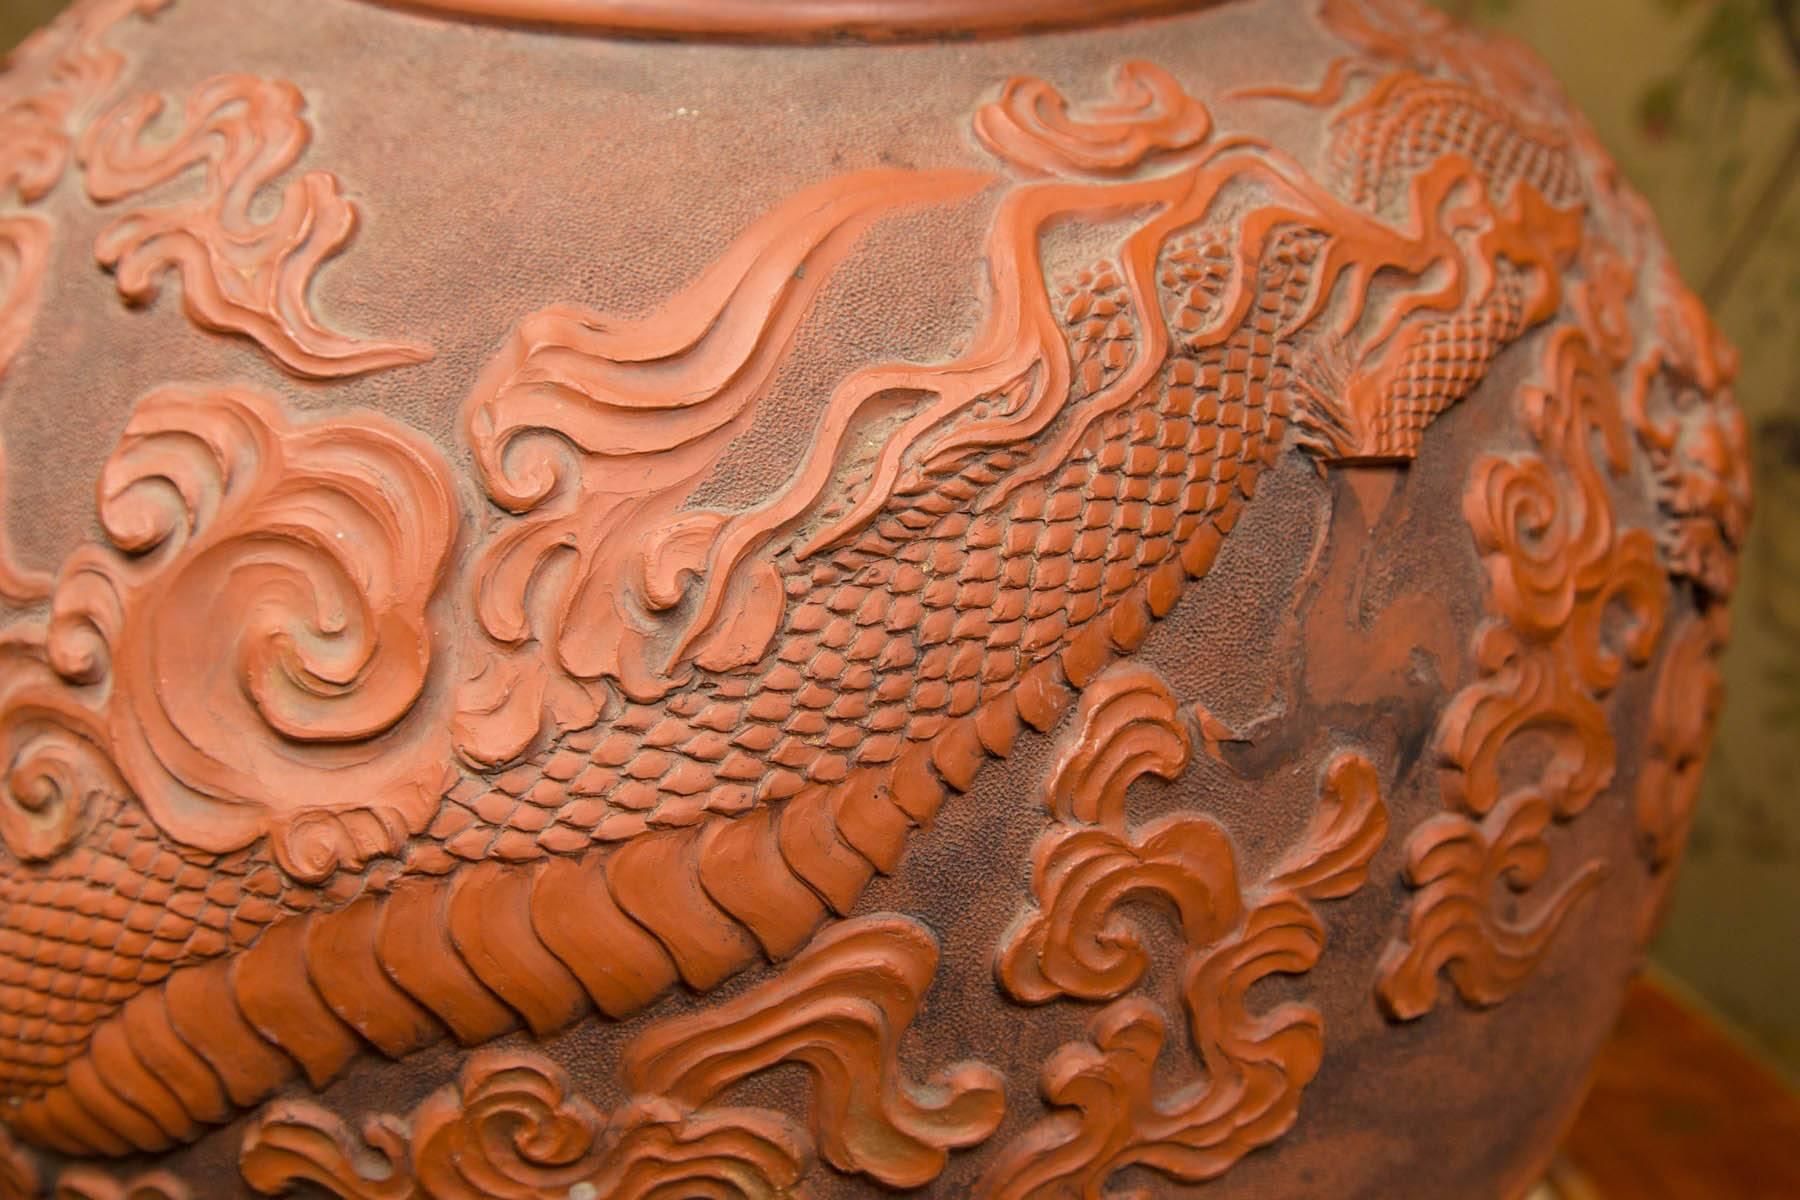 tokoname pottery marks